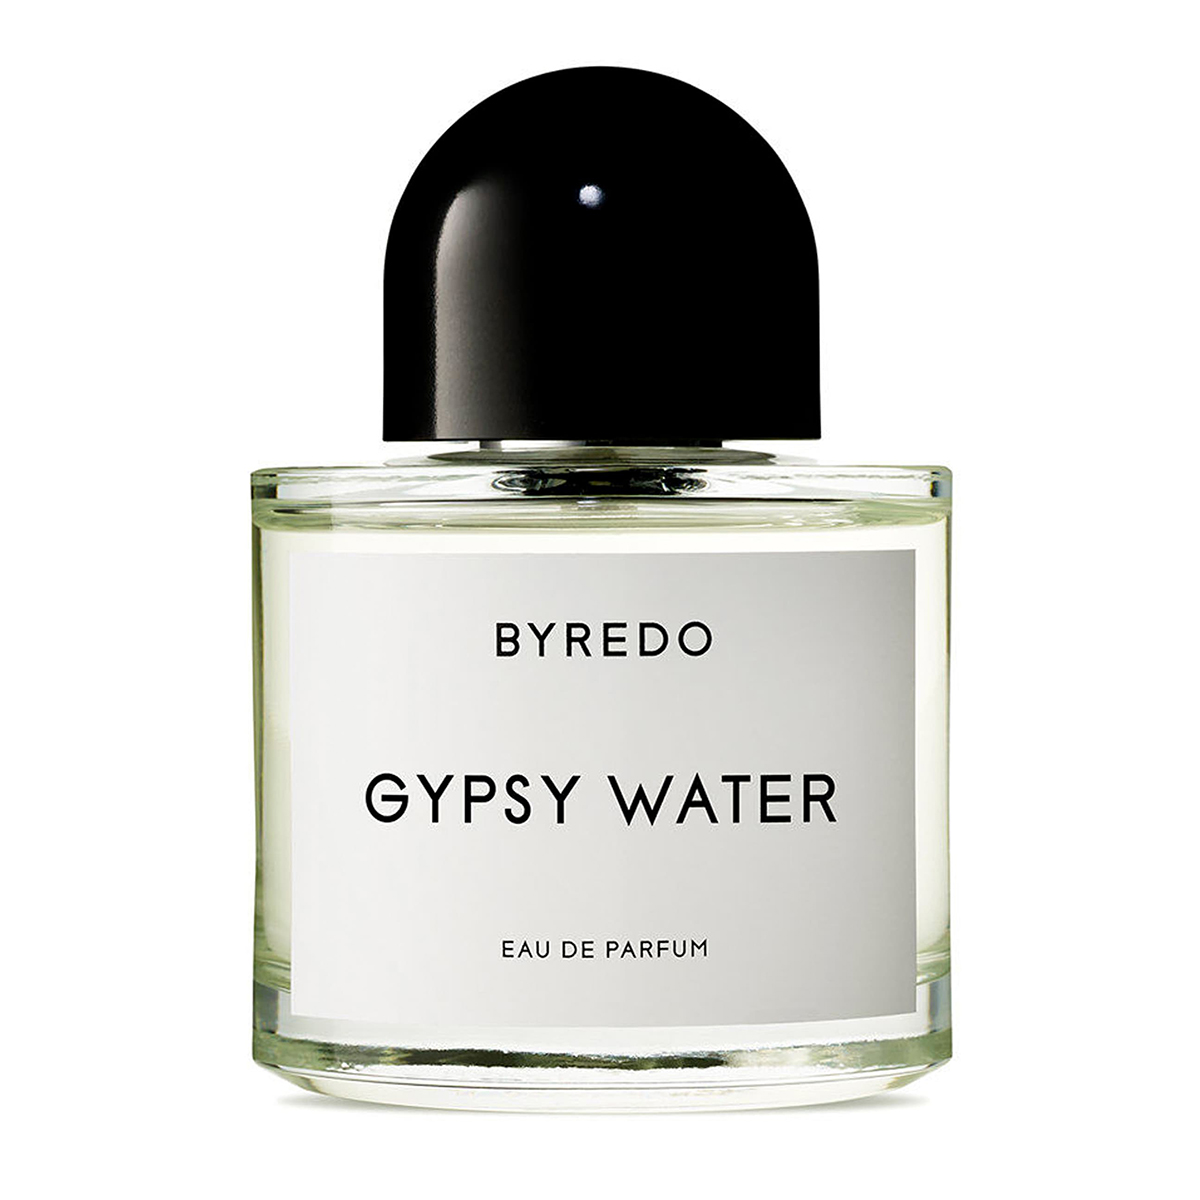 Byredo Gypsy Water Eau de Parfum, 50ml